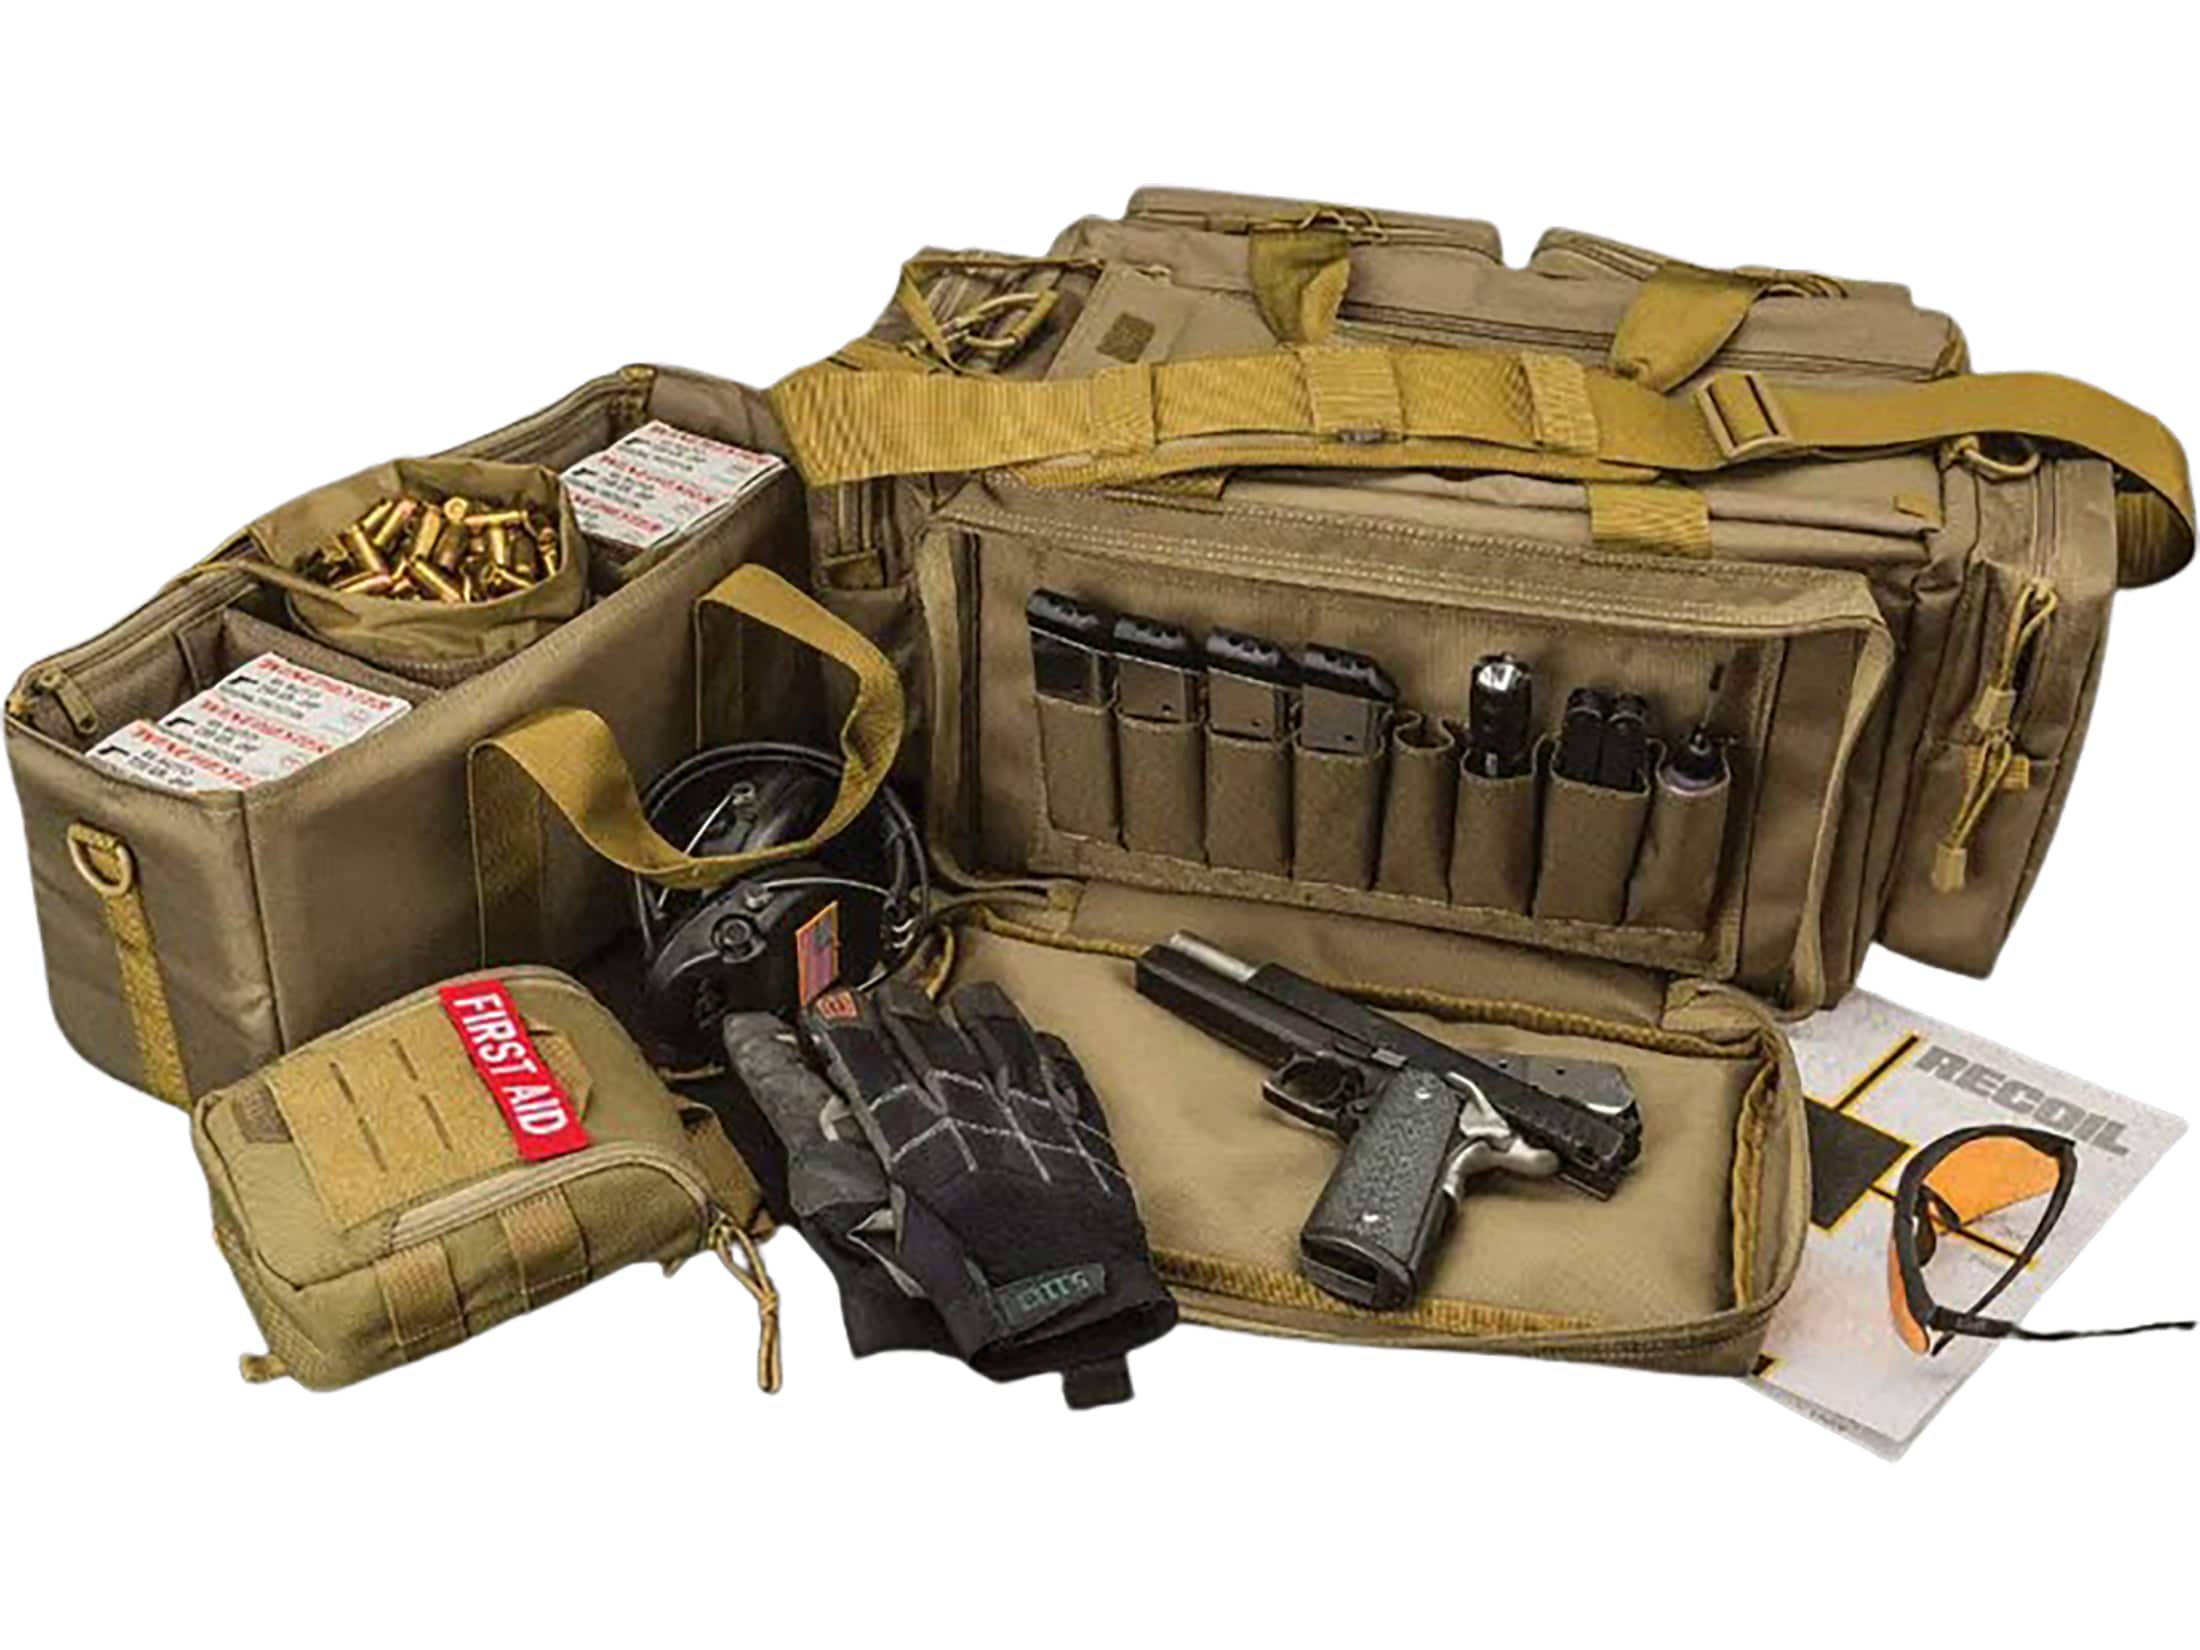  VIGEGARI Large Pistol Range Bag Shooting - Tactical Gun Range  Bag with 3 Pistol Cases, Gun Bags for Handguns, Womens Gun Bag for Men, Gun  Carrying Duffle Bag for Gun Accessories 